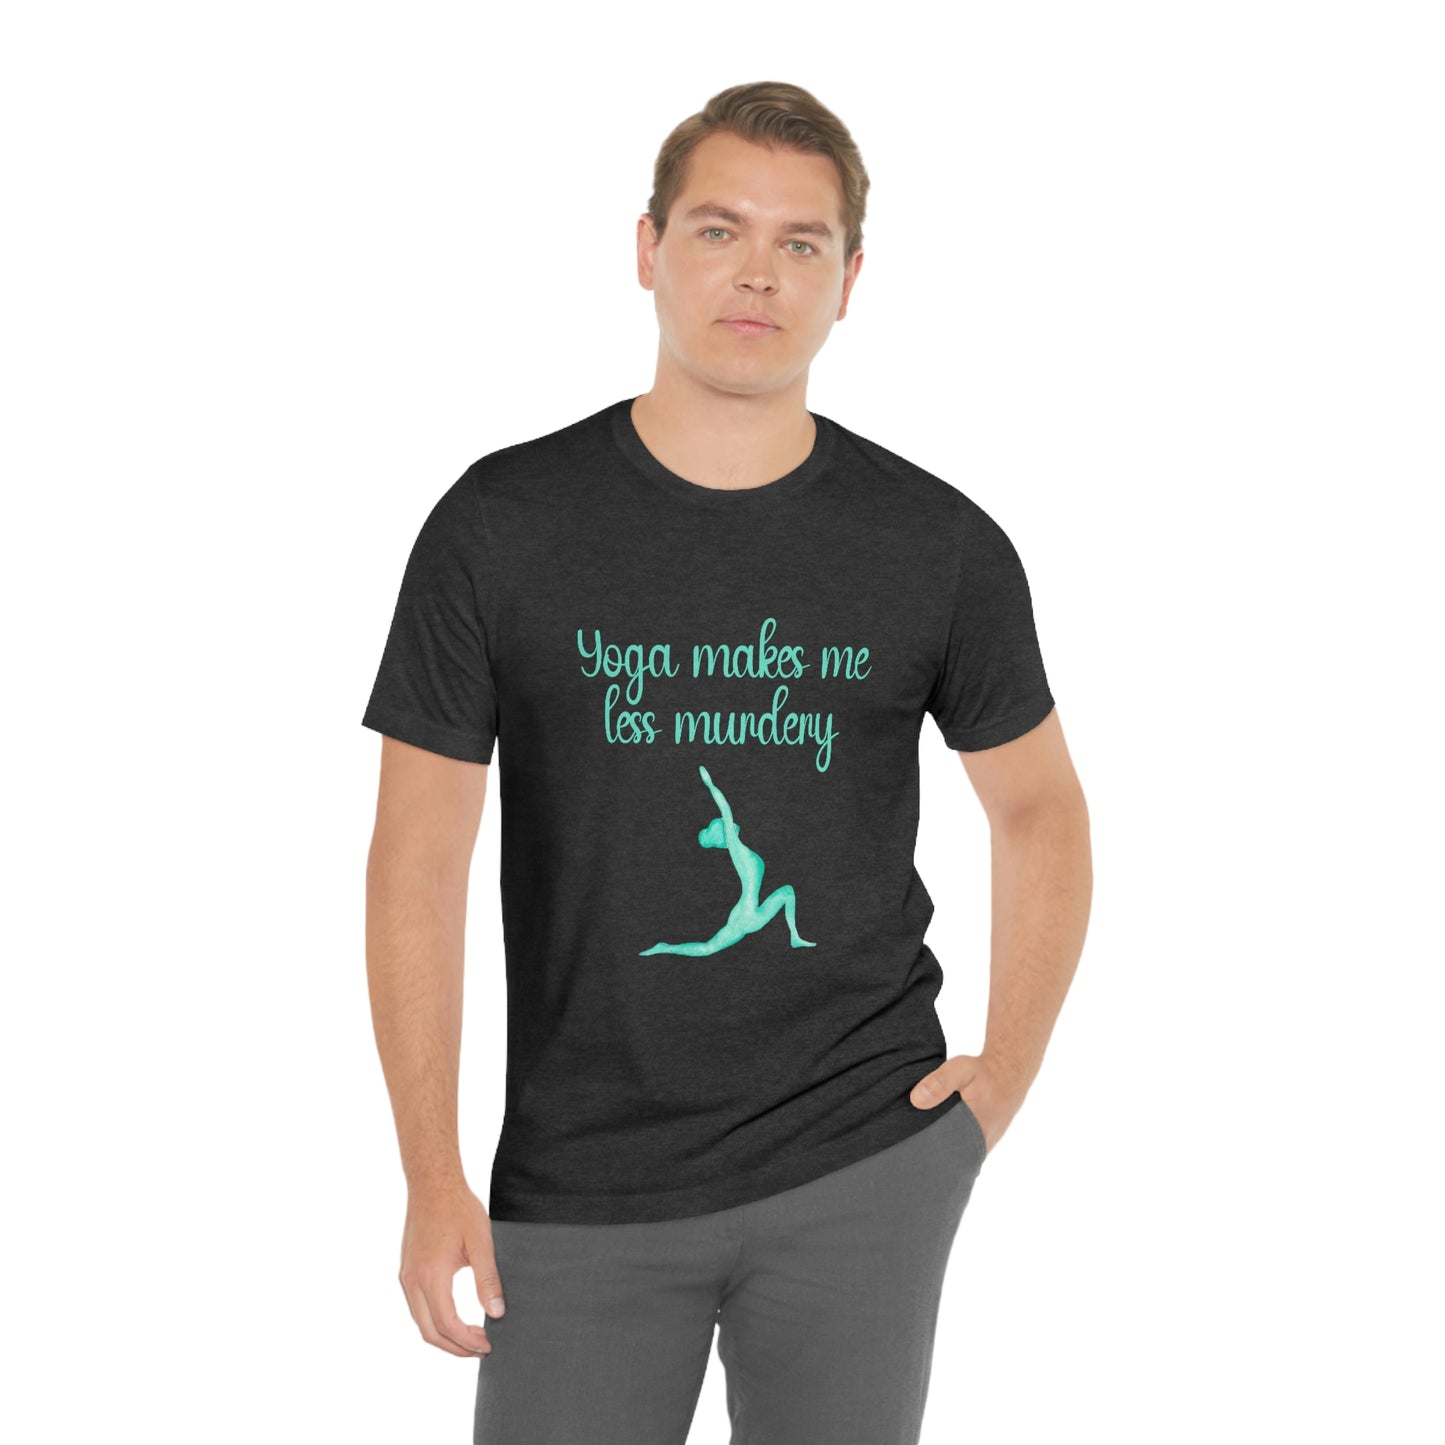 Yoga Makes Me Less Murdery Unisex Jersey Short Sleeve Tee Yoga shirt for Yogi shirt for yoga class